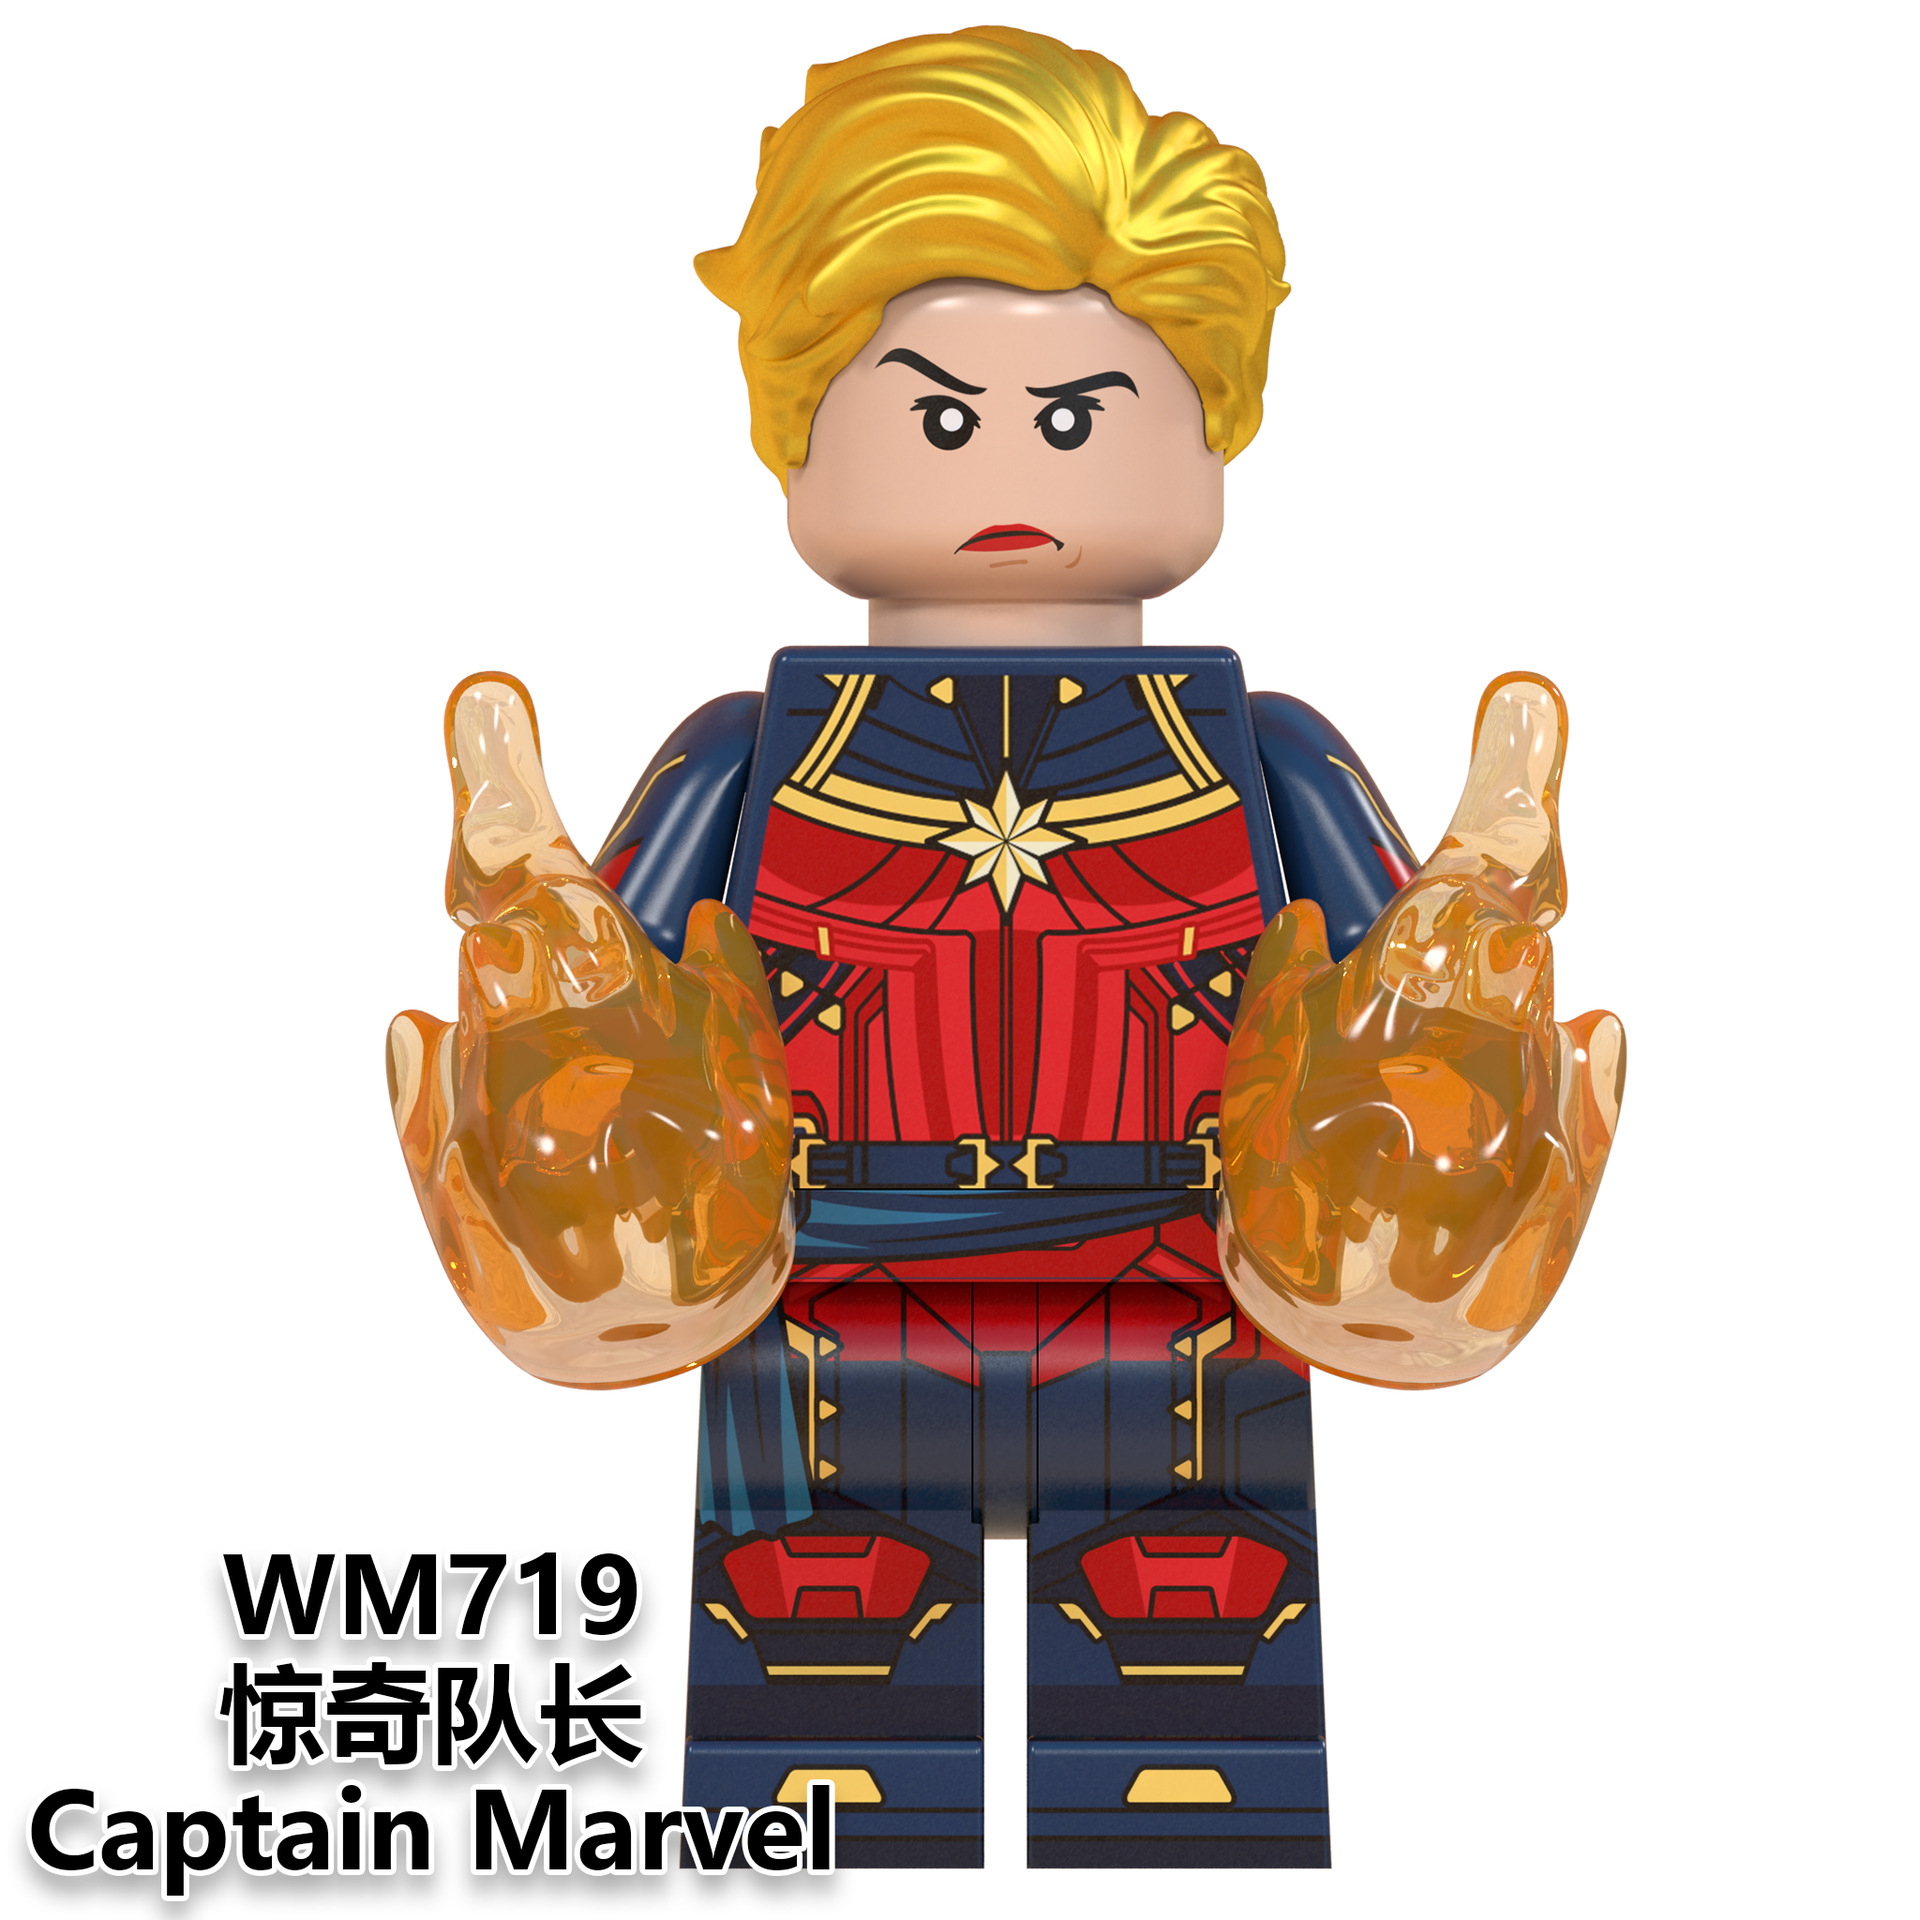 Captain Marvel 'Vers' (Kree Starforce Uniform), 60% OFF